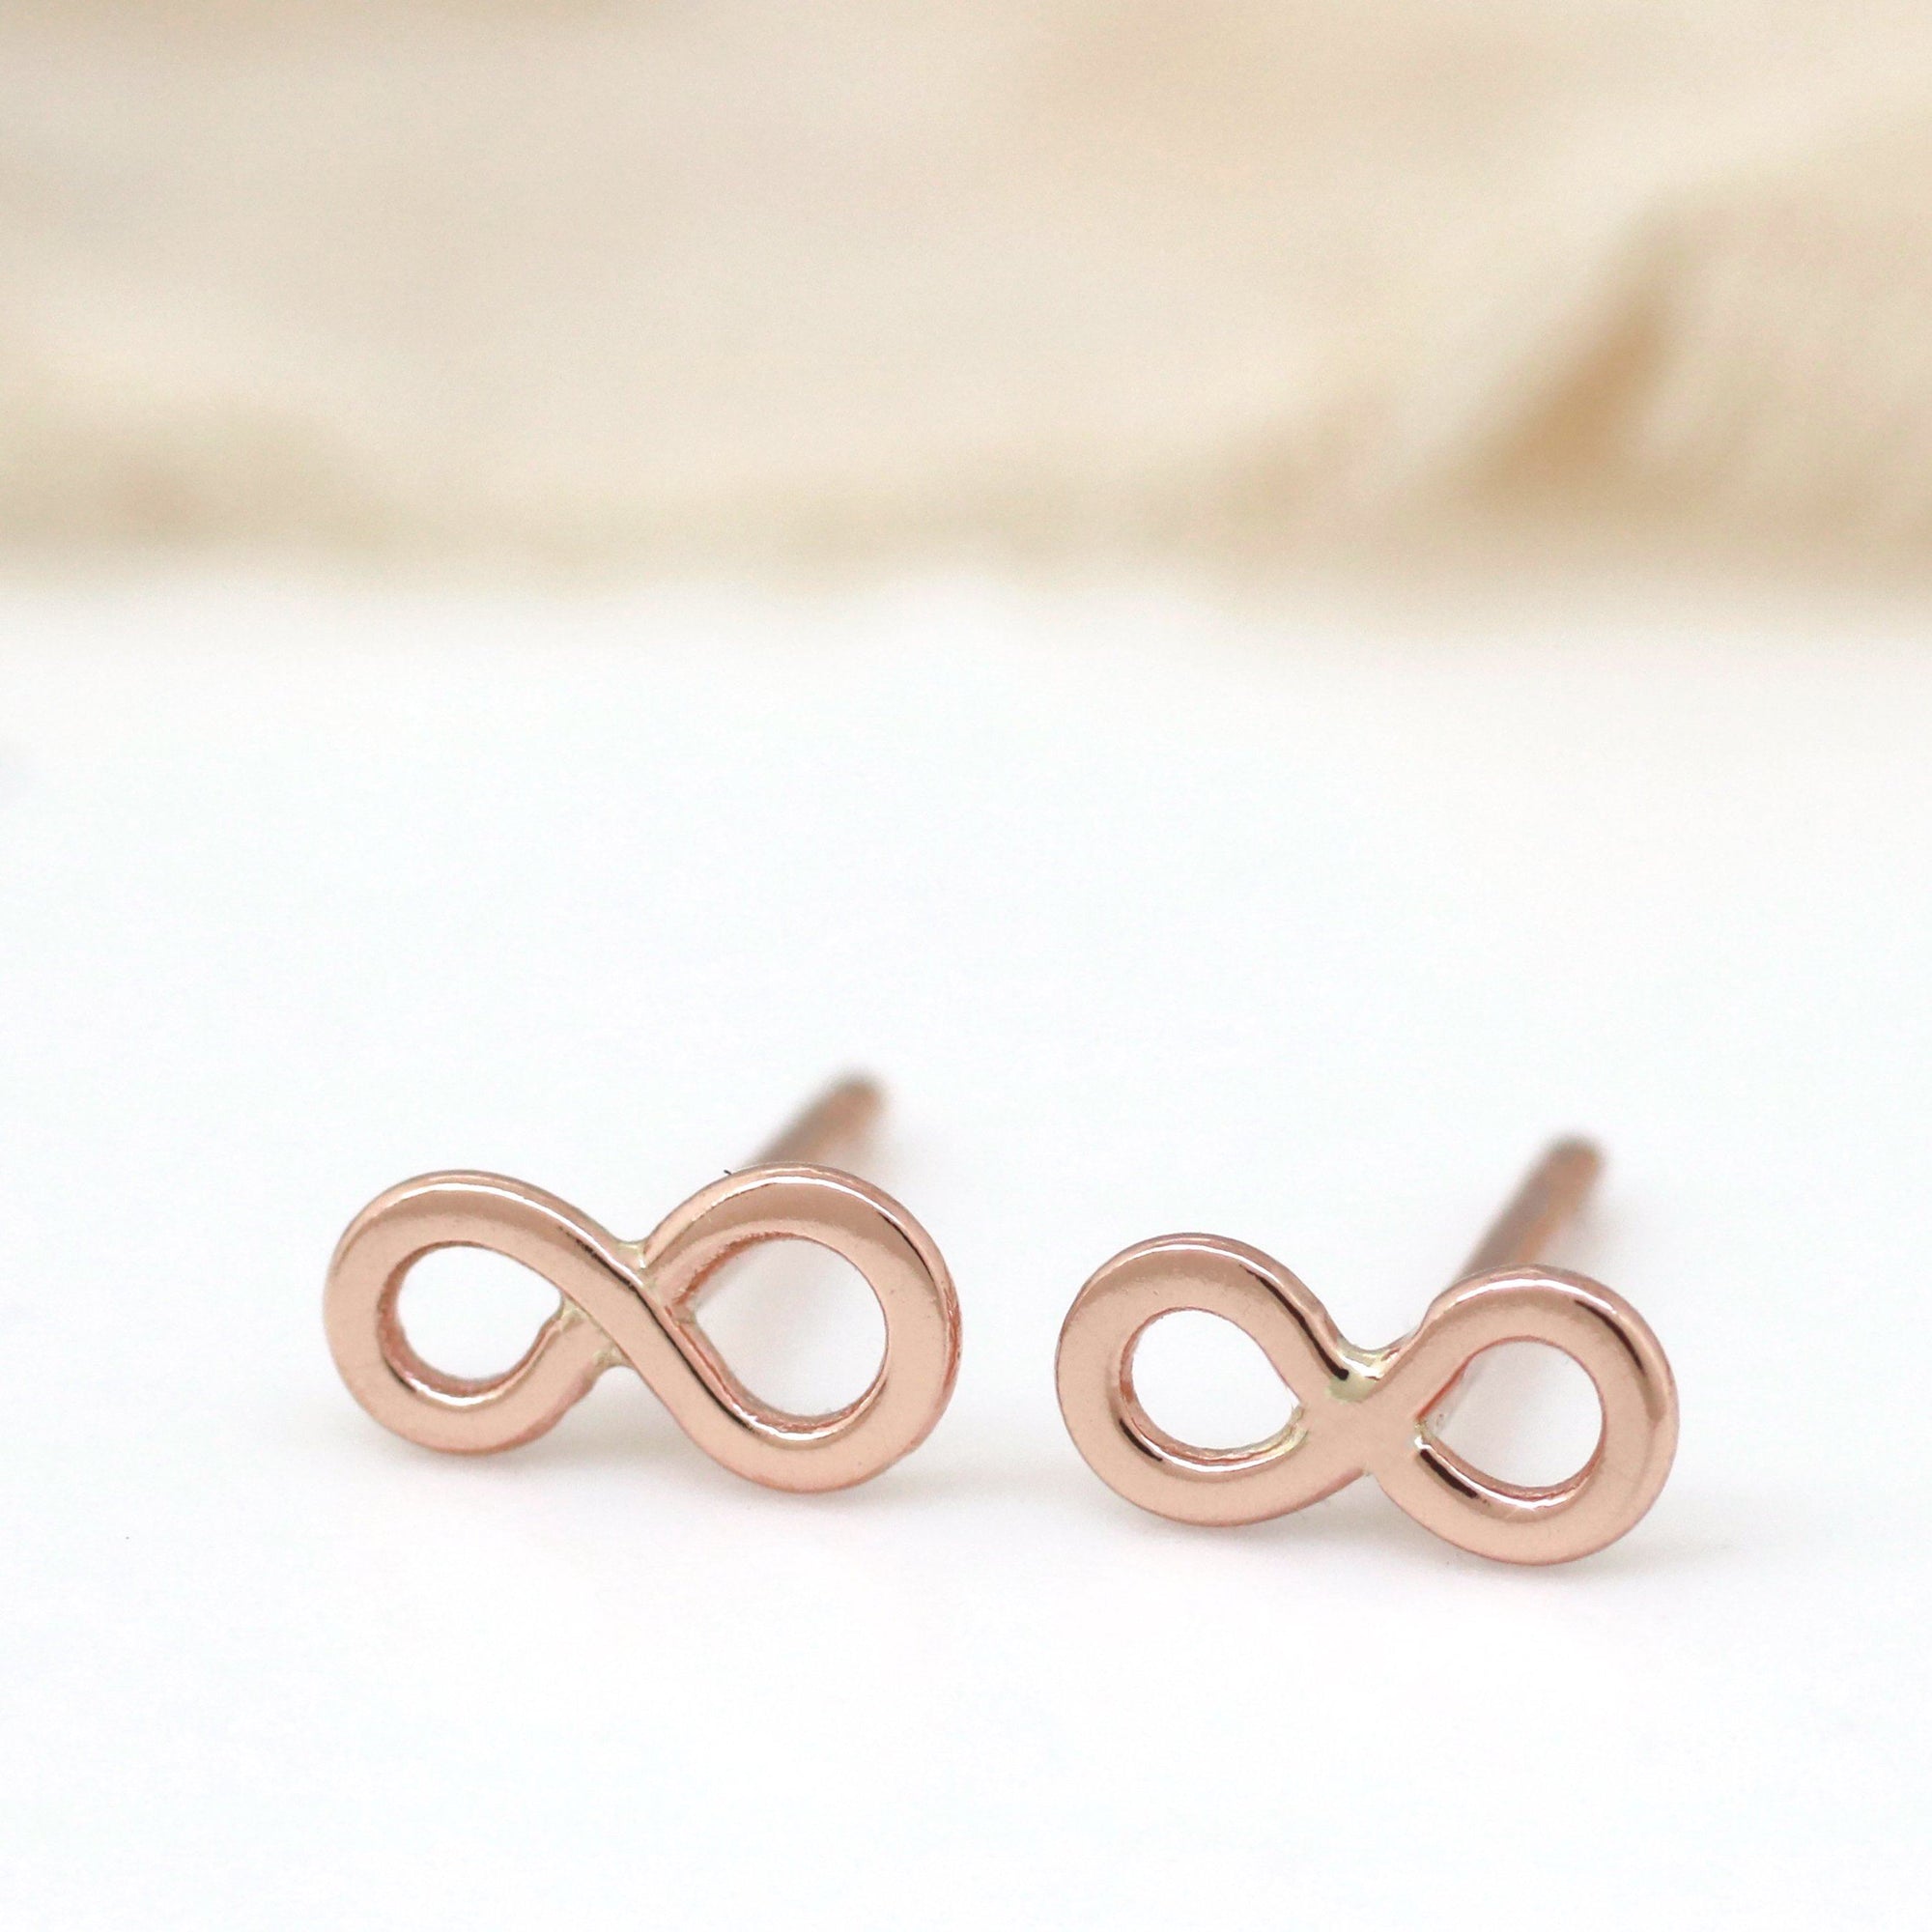 Tiny 9ct Gold Earrings - Infinity Symbol